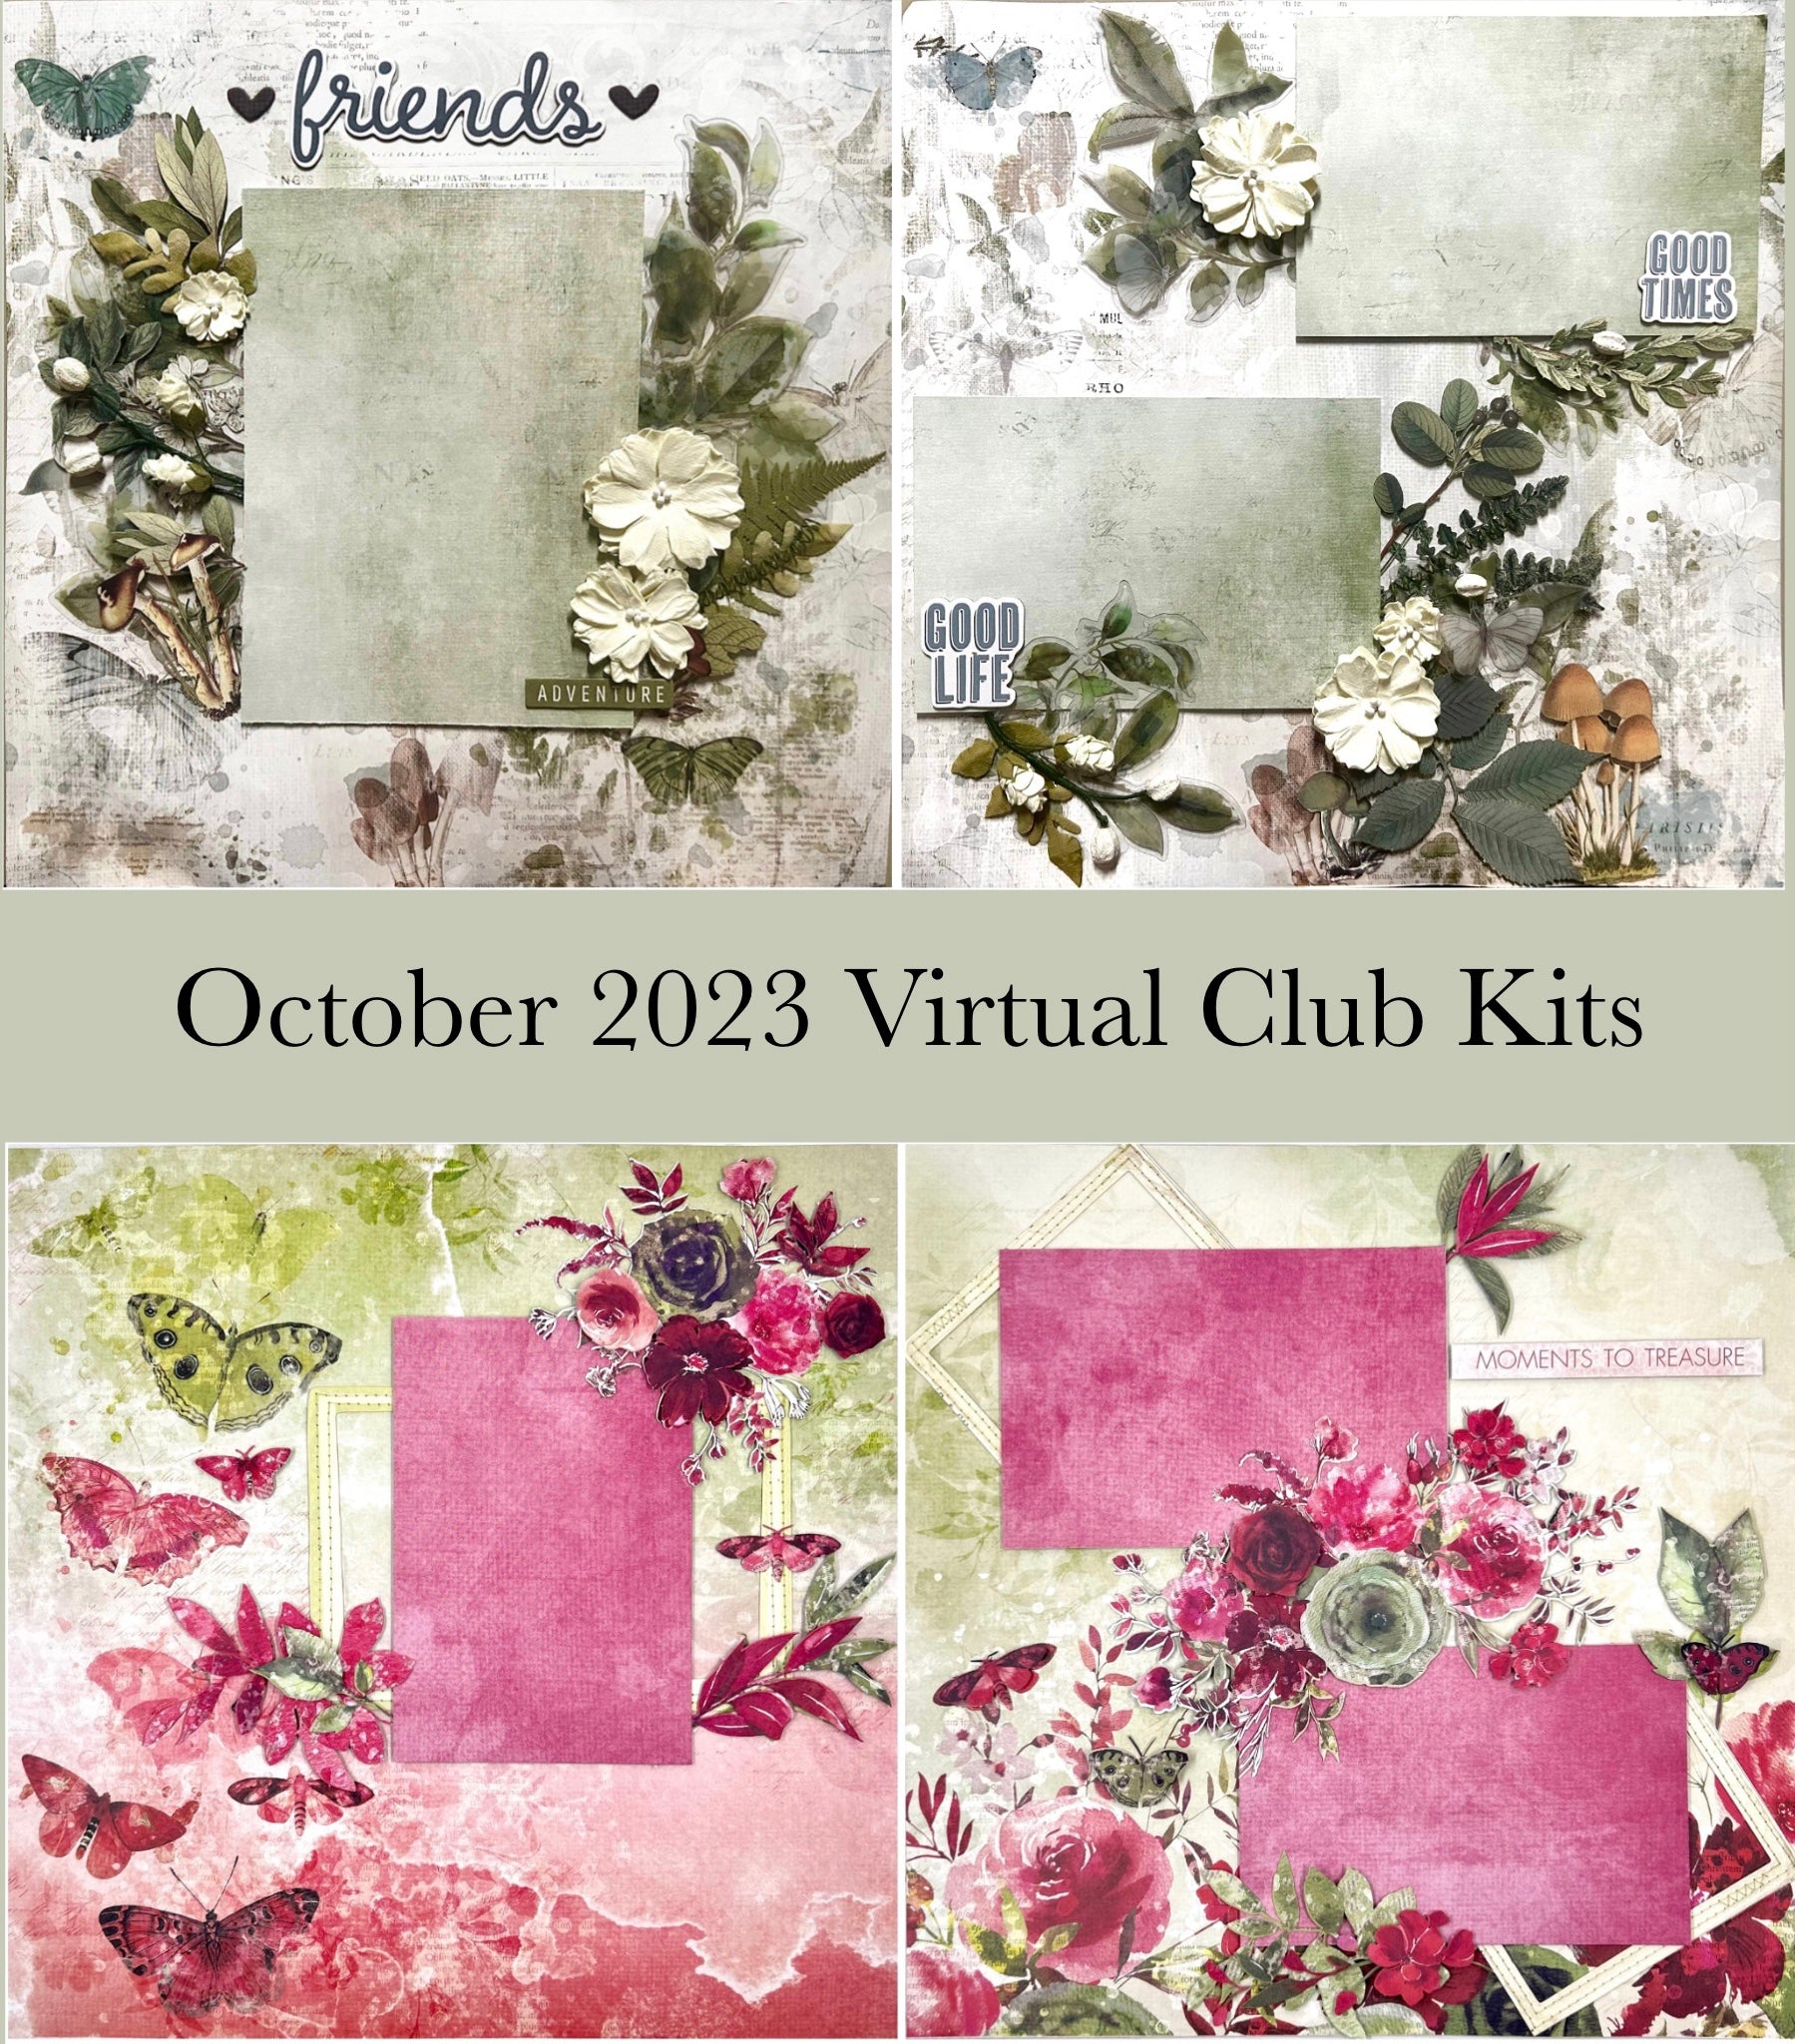 Shabby Chic Florals Journal Scrapbook Embellishments Kit By Scrapbook Attic  Studio